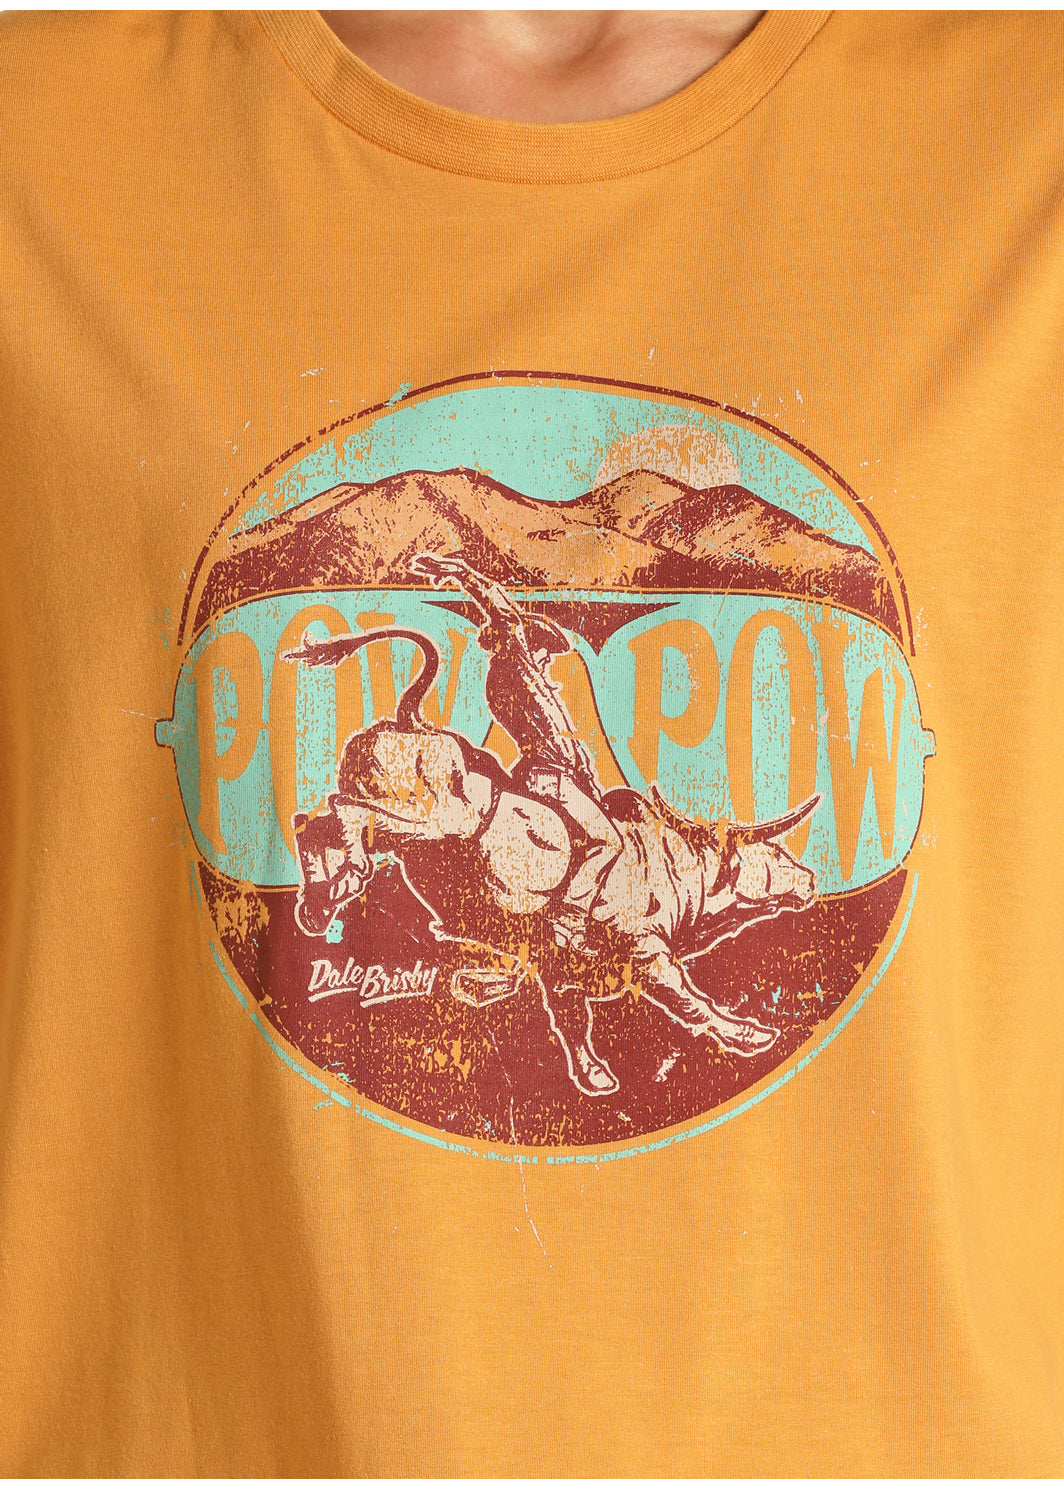 PowPow Bullrider Gold Men's T-Shirt